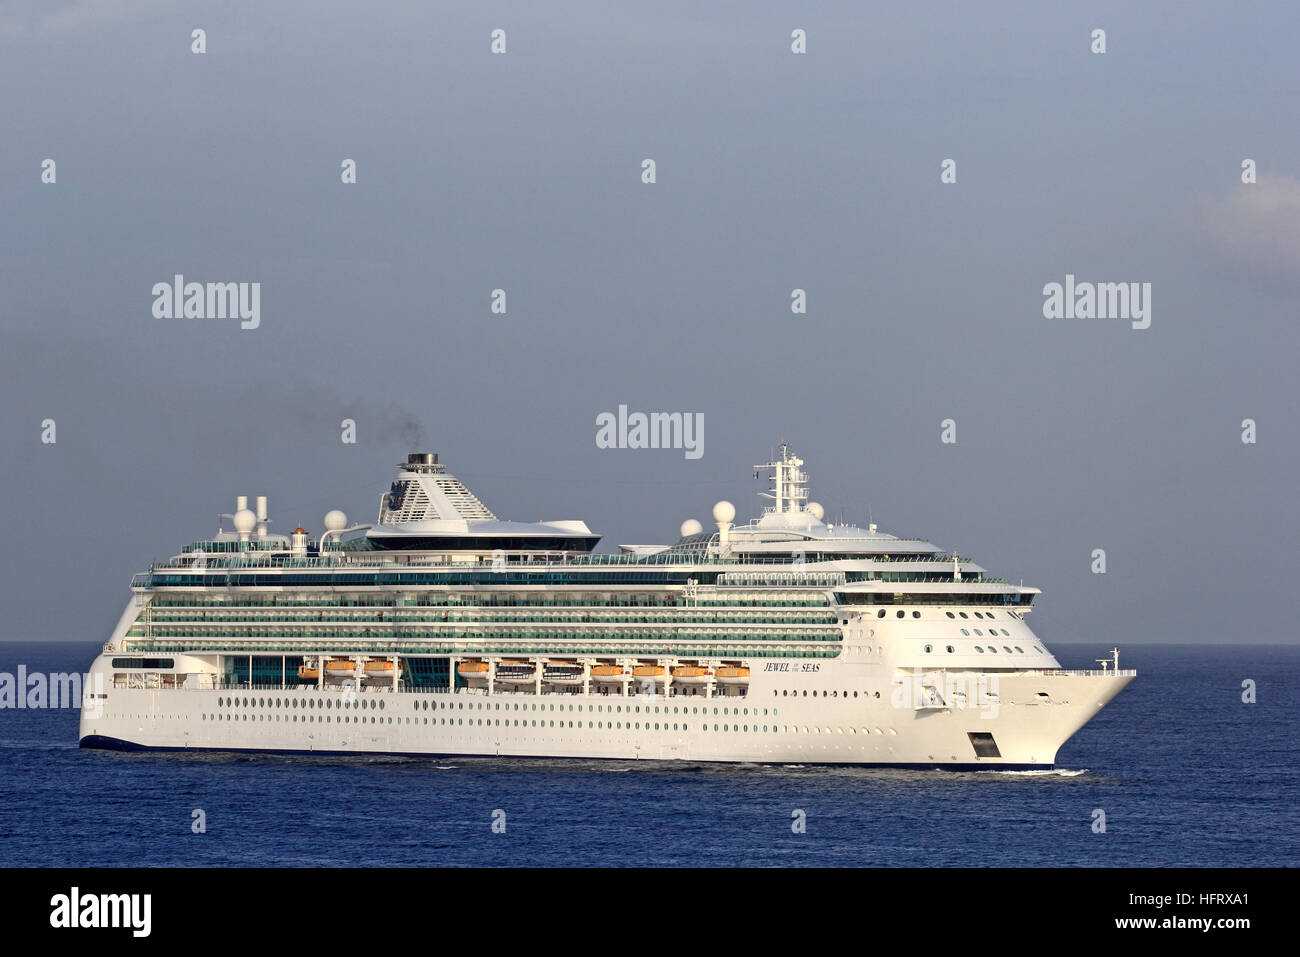 Royal Caribbean International Cruise ship 'Jewel of the Seas' entering harbour, Bridgetown, Barbados Stock Photo